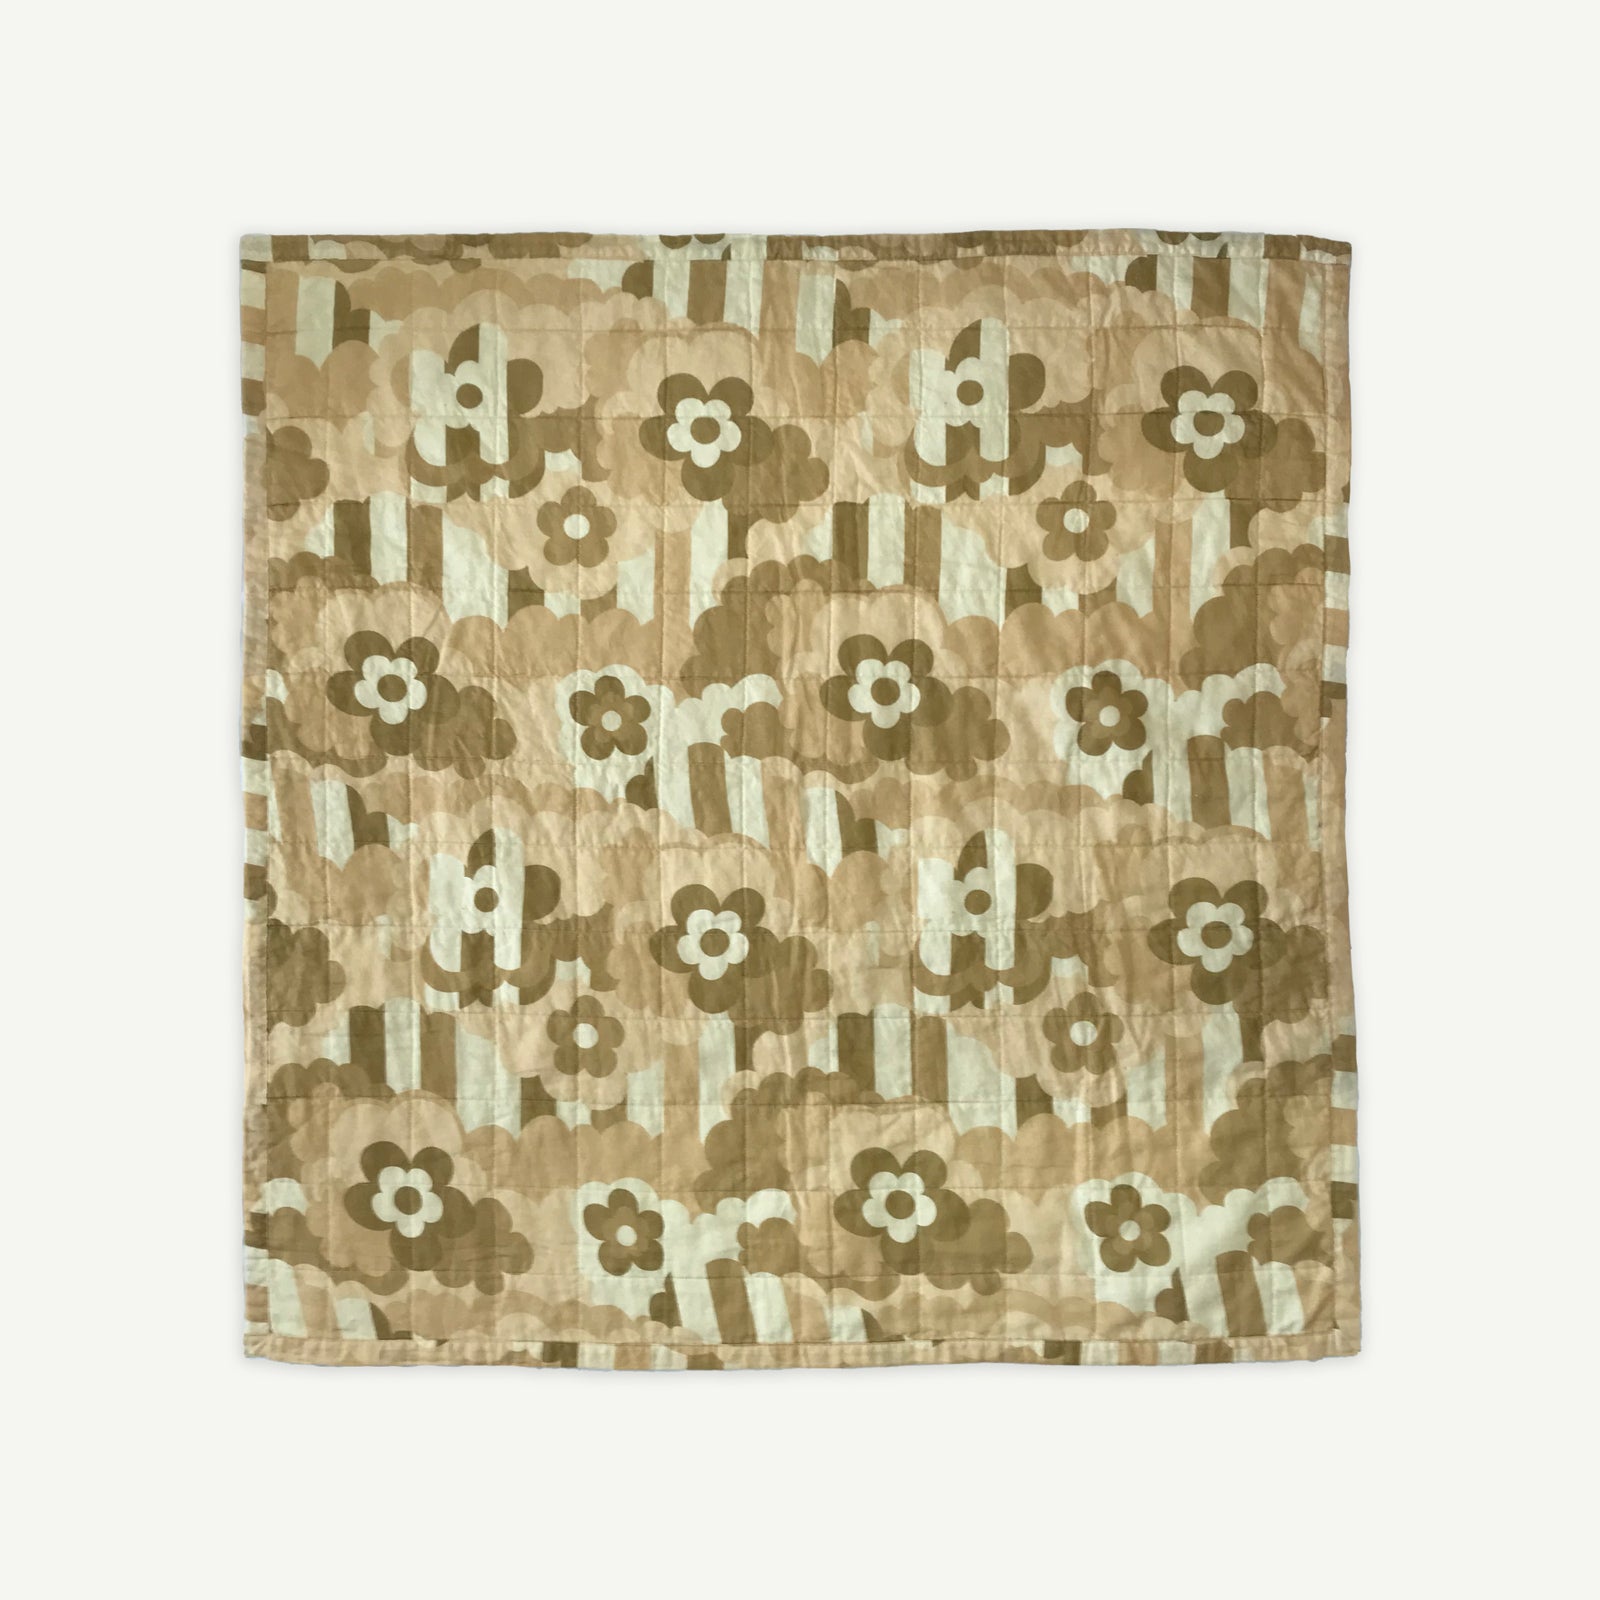 Playmat / Cot quilt : Checkers & Petal Puff